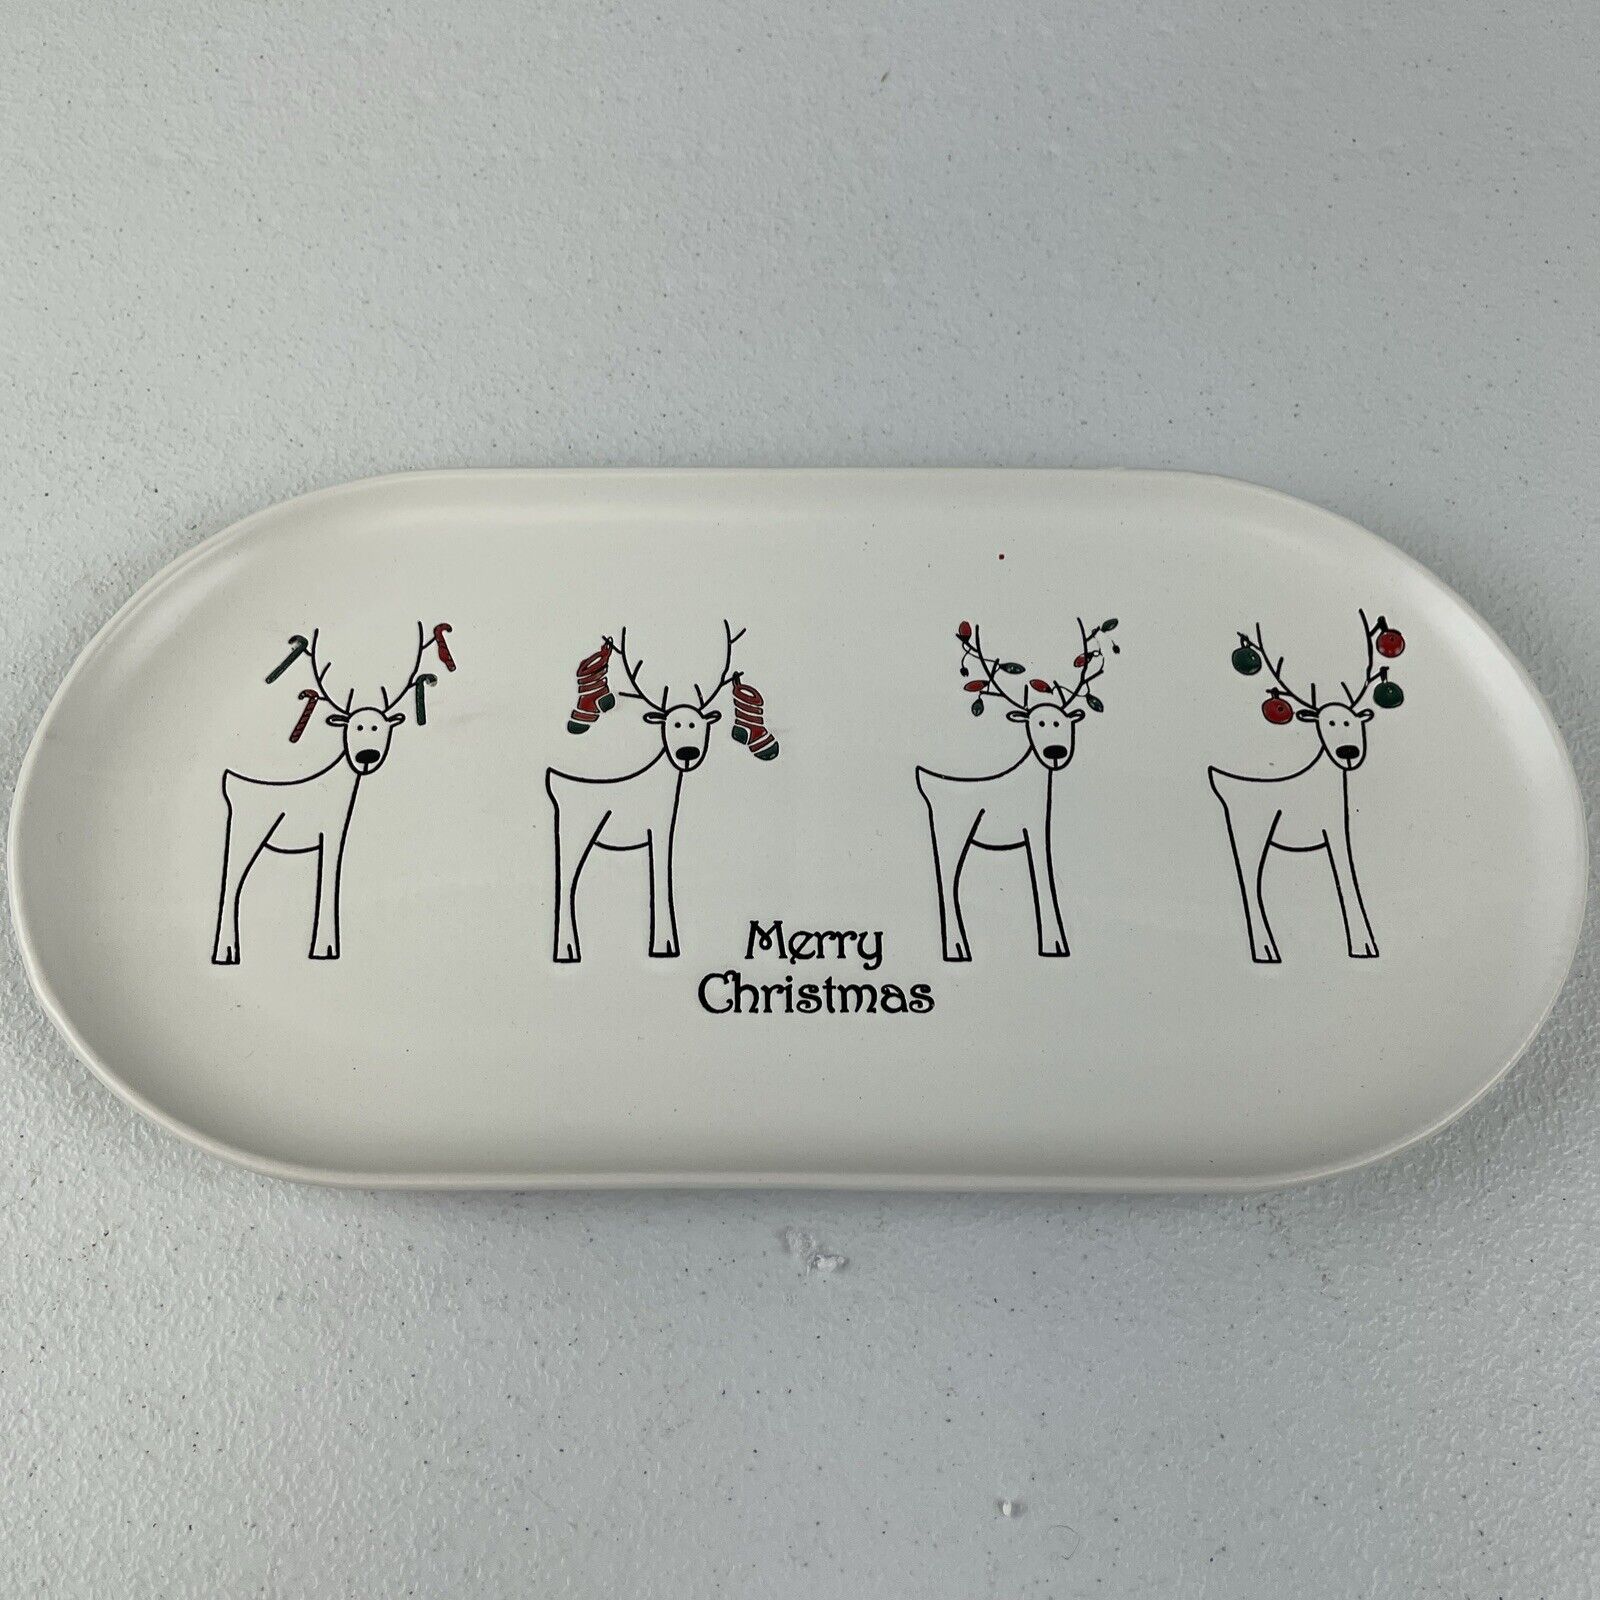 Cordon Bleu Christmas RUDY Reindeer Merry Christmas Ceramic Oval Platter